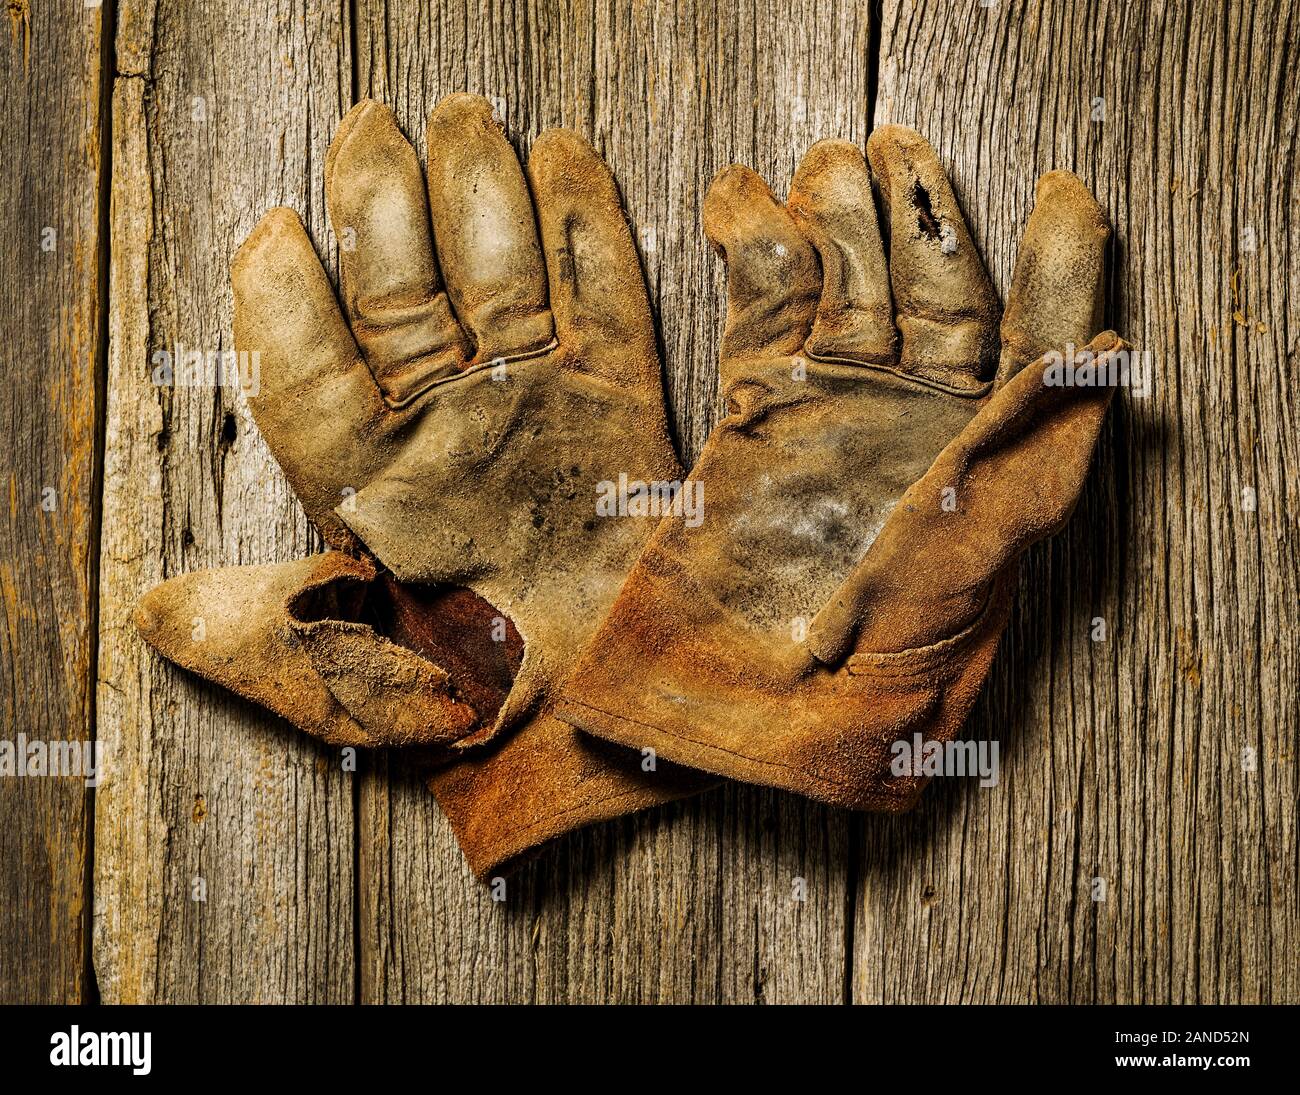 Studio still life close-up of worn leather work gloves Stock Photo